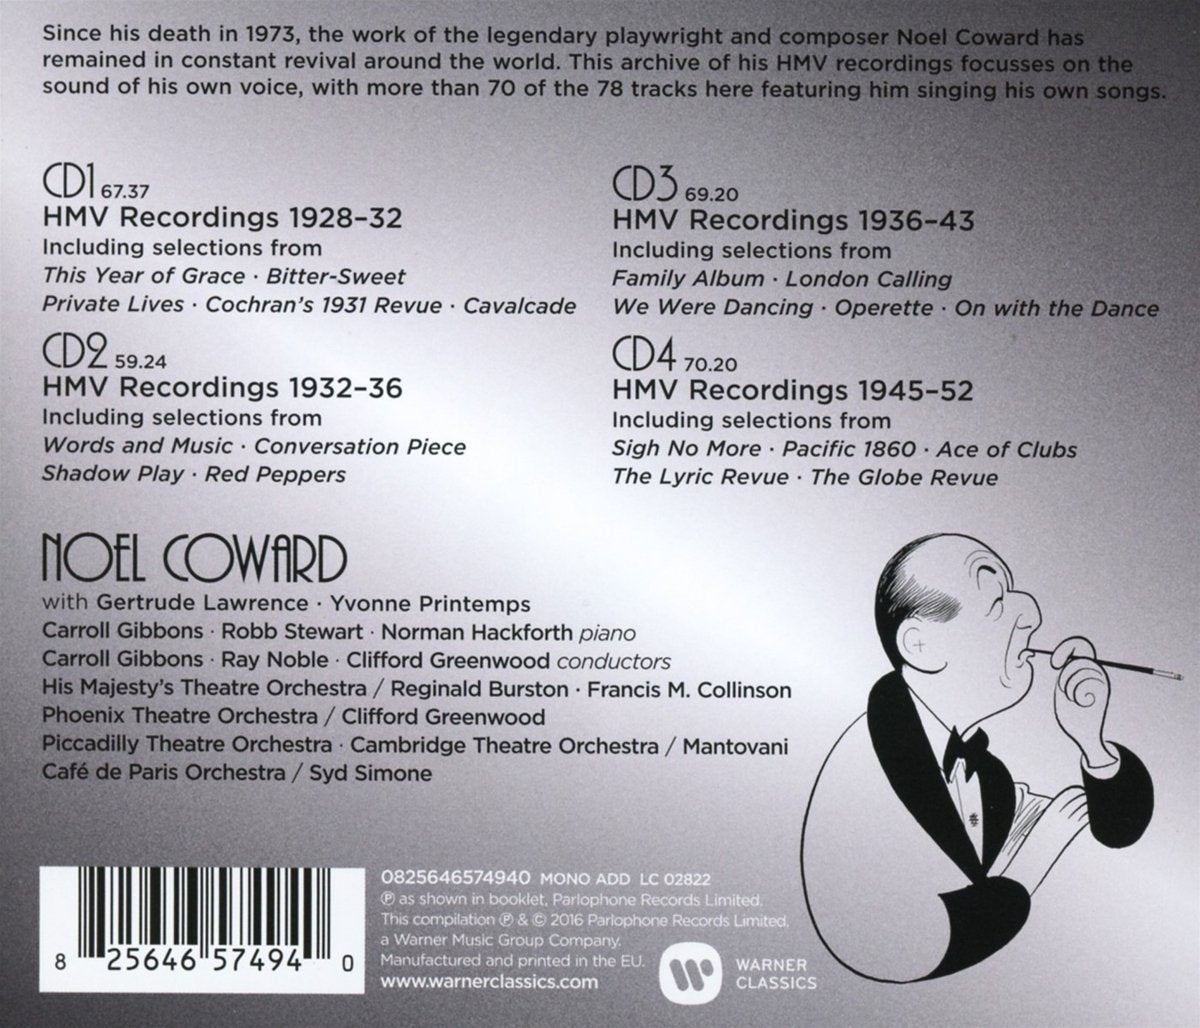 NOEL COWARD - HIS HMV RECORDINGS (4 CDS)